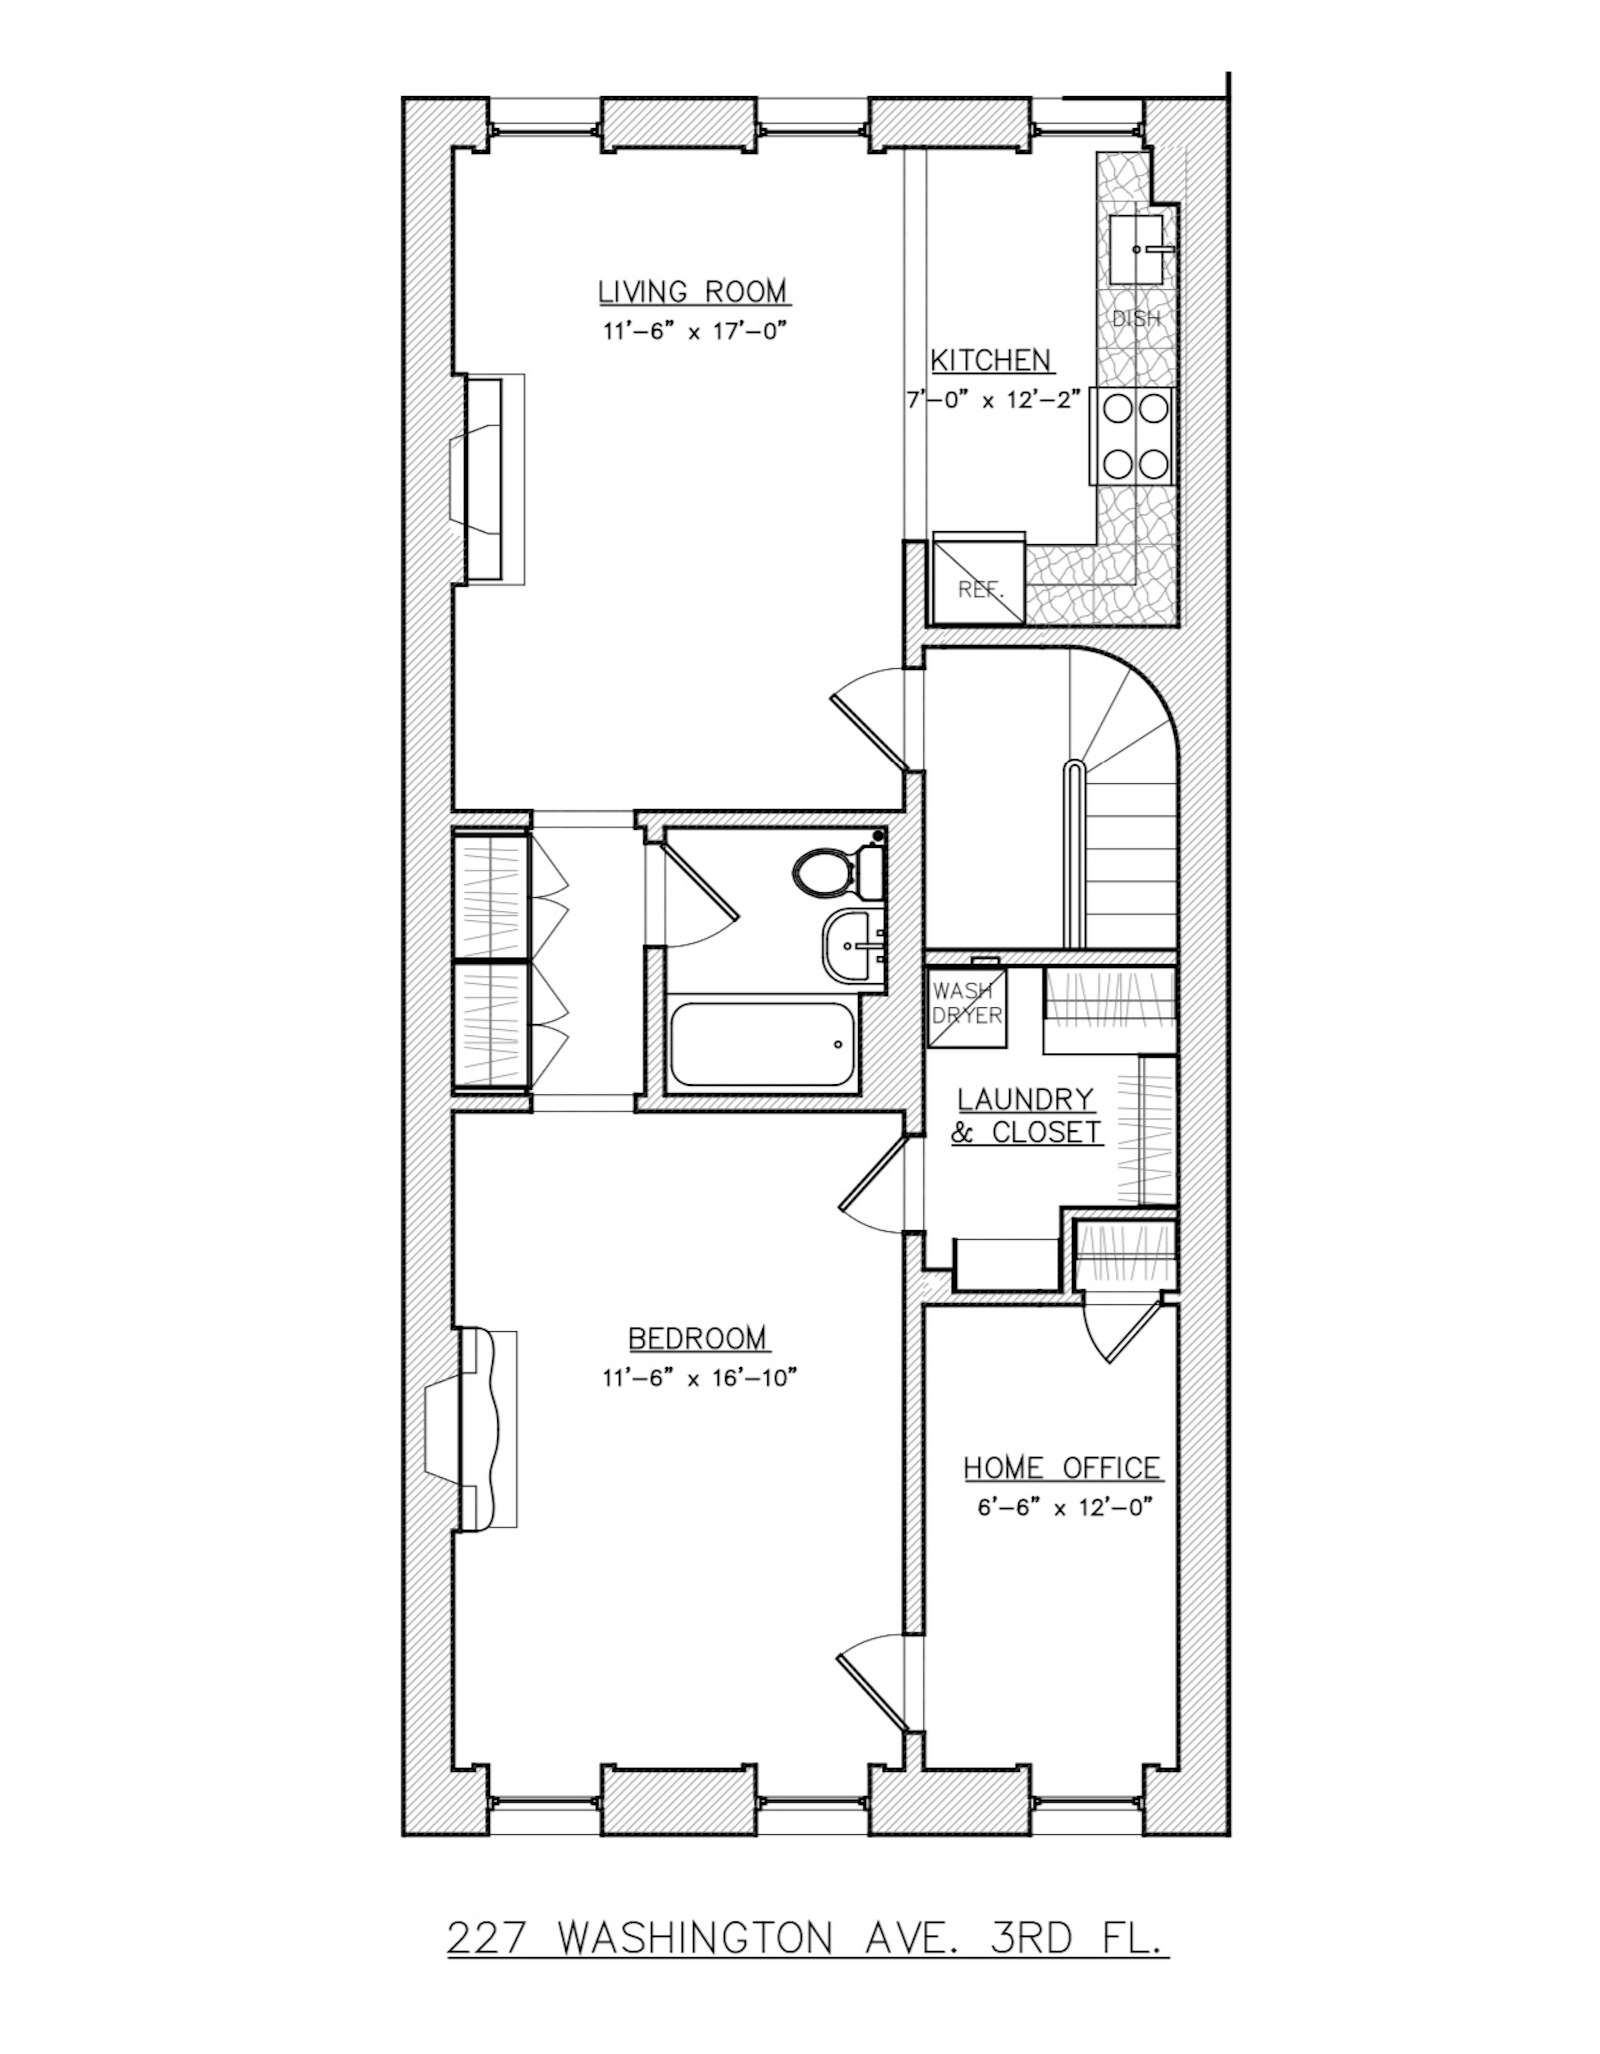 Floorplan for 227 Washington Ave, 3